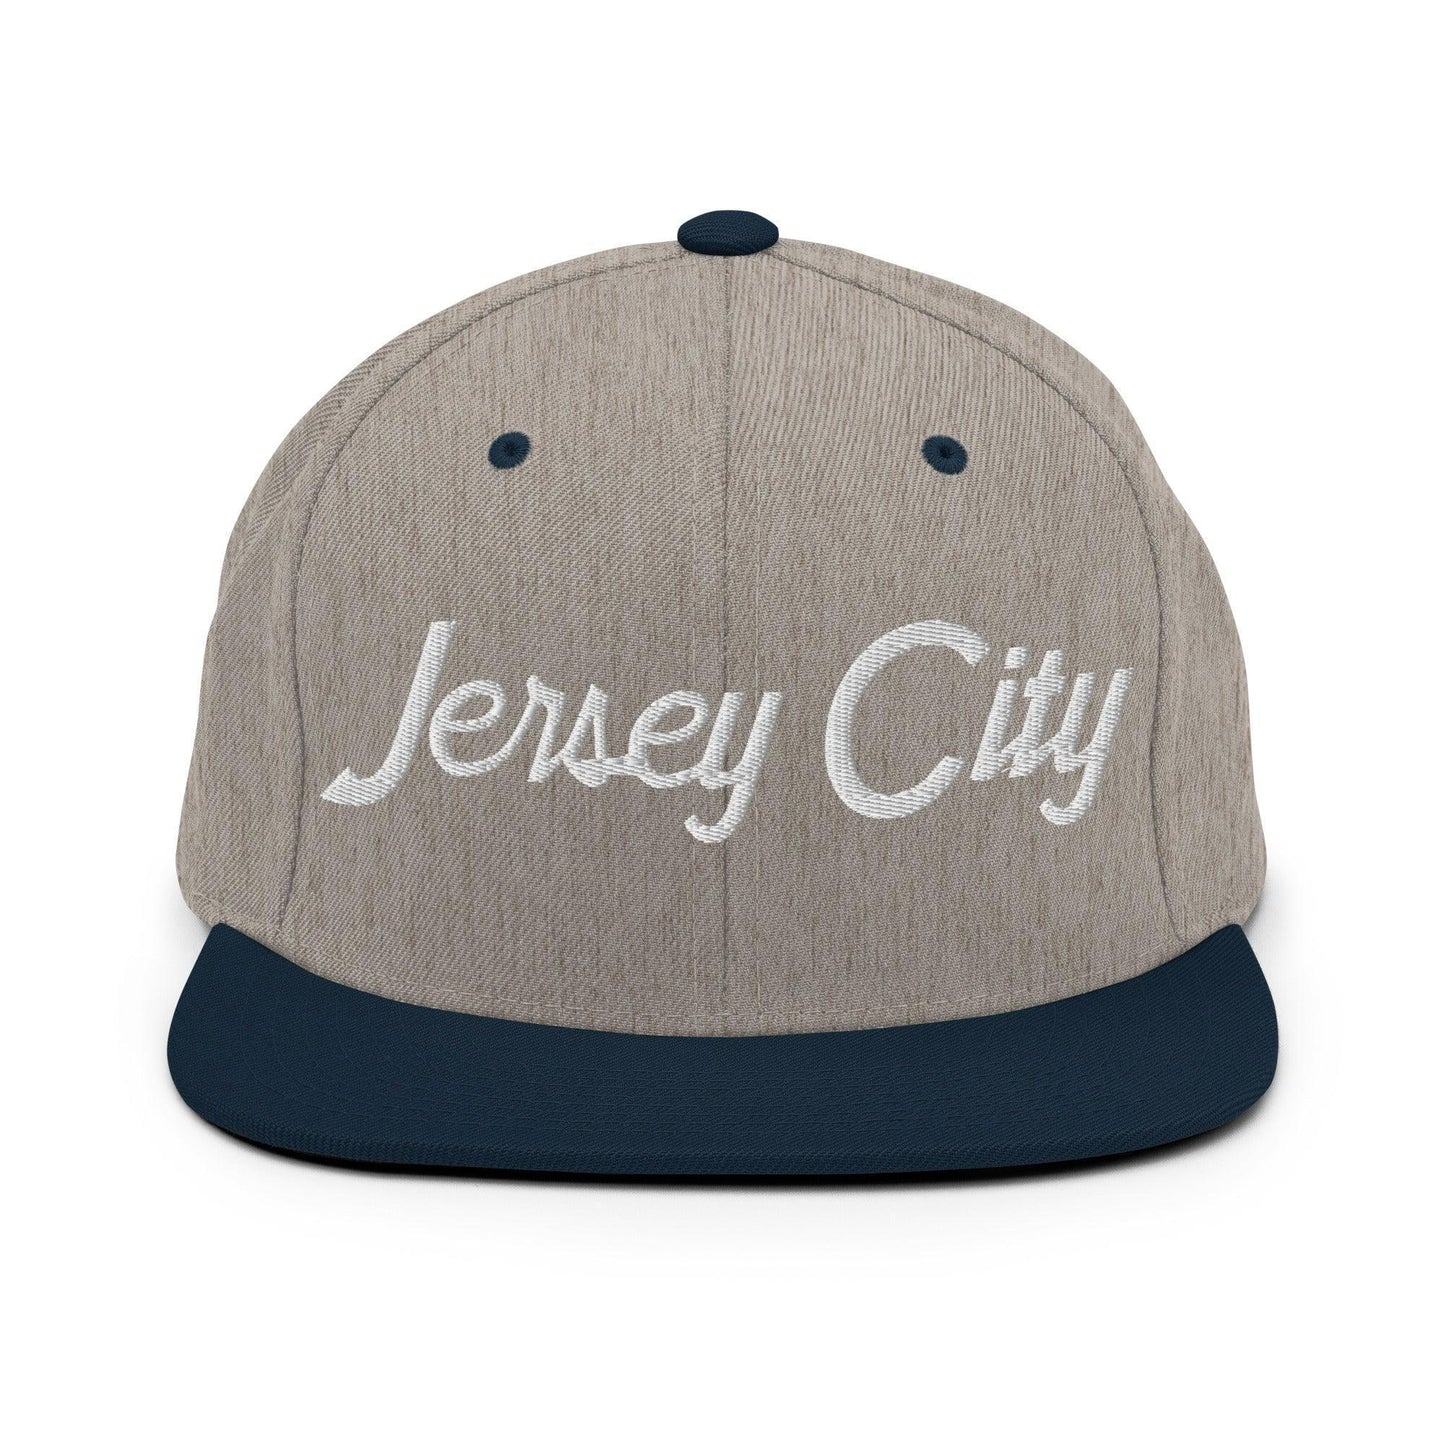 Jersey City Script Snapback Hat Heather Grey/ Navy